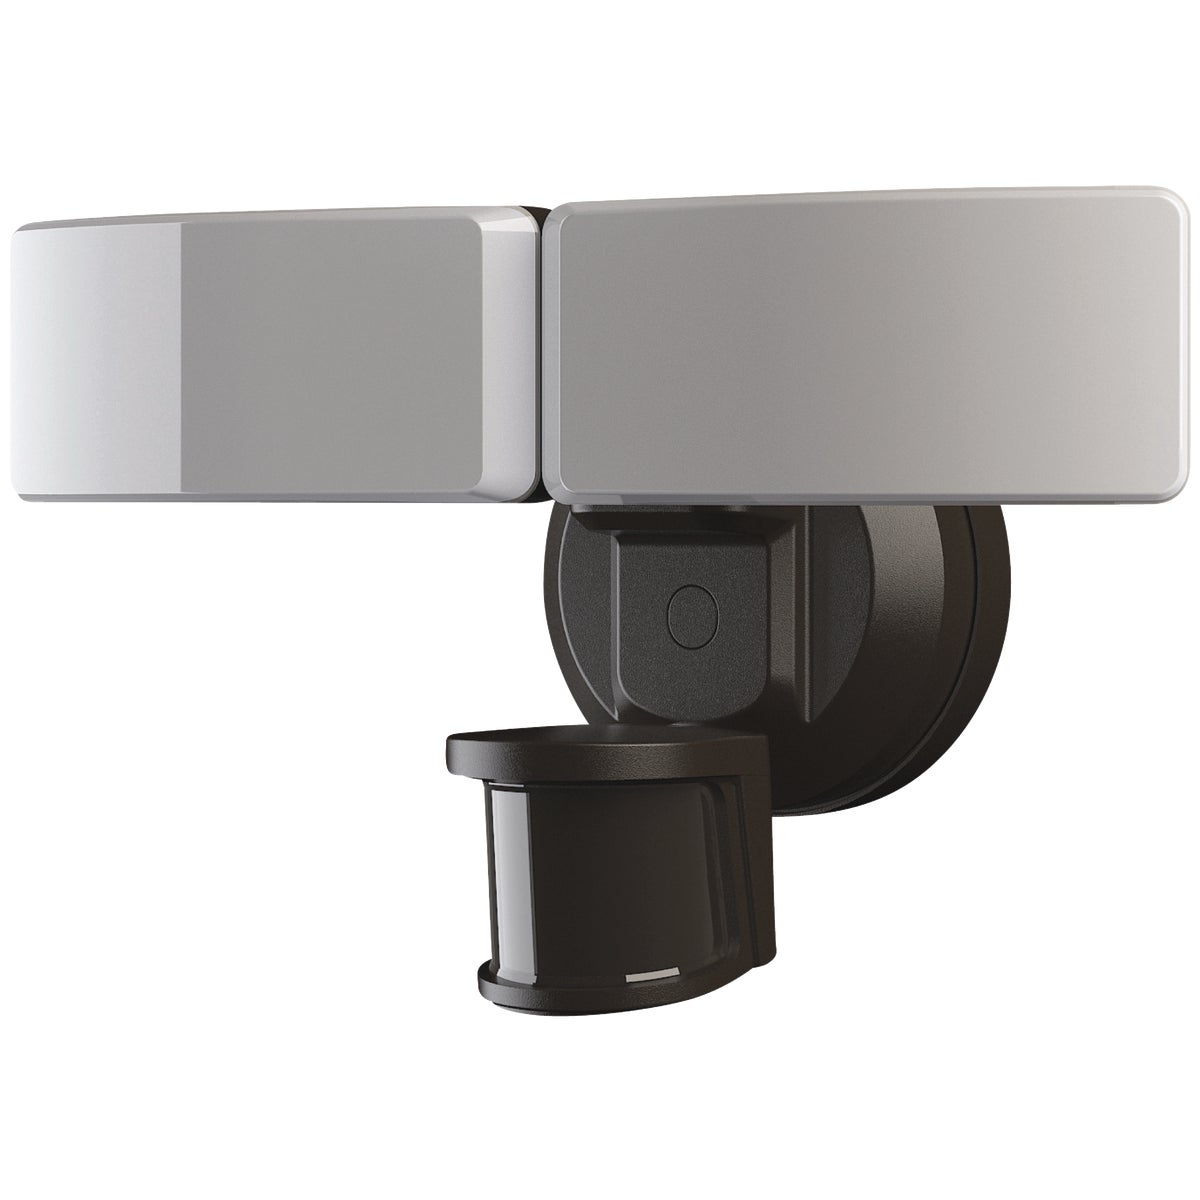 Bronze Motion Sensing Twin Swivel Head LED Floodlight Fixture